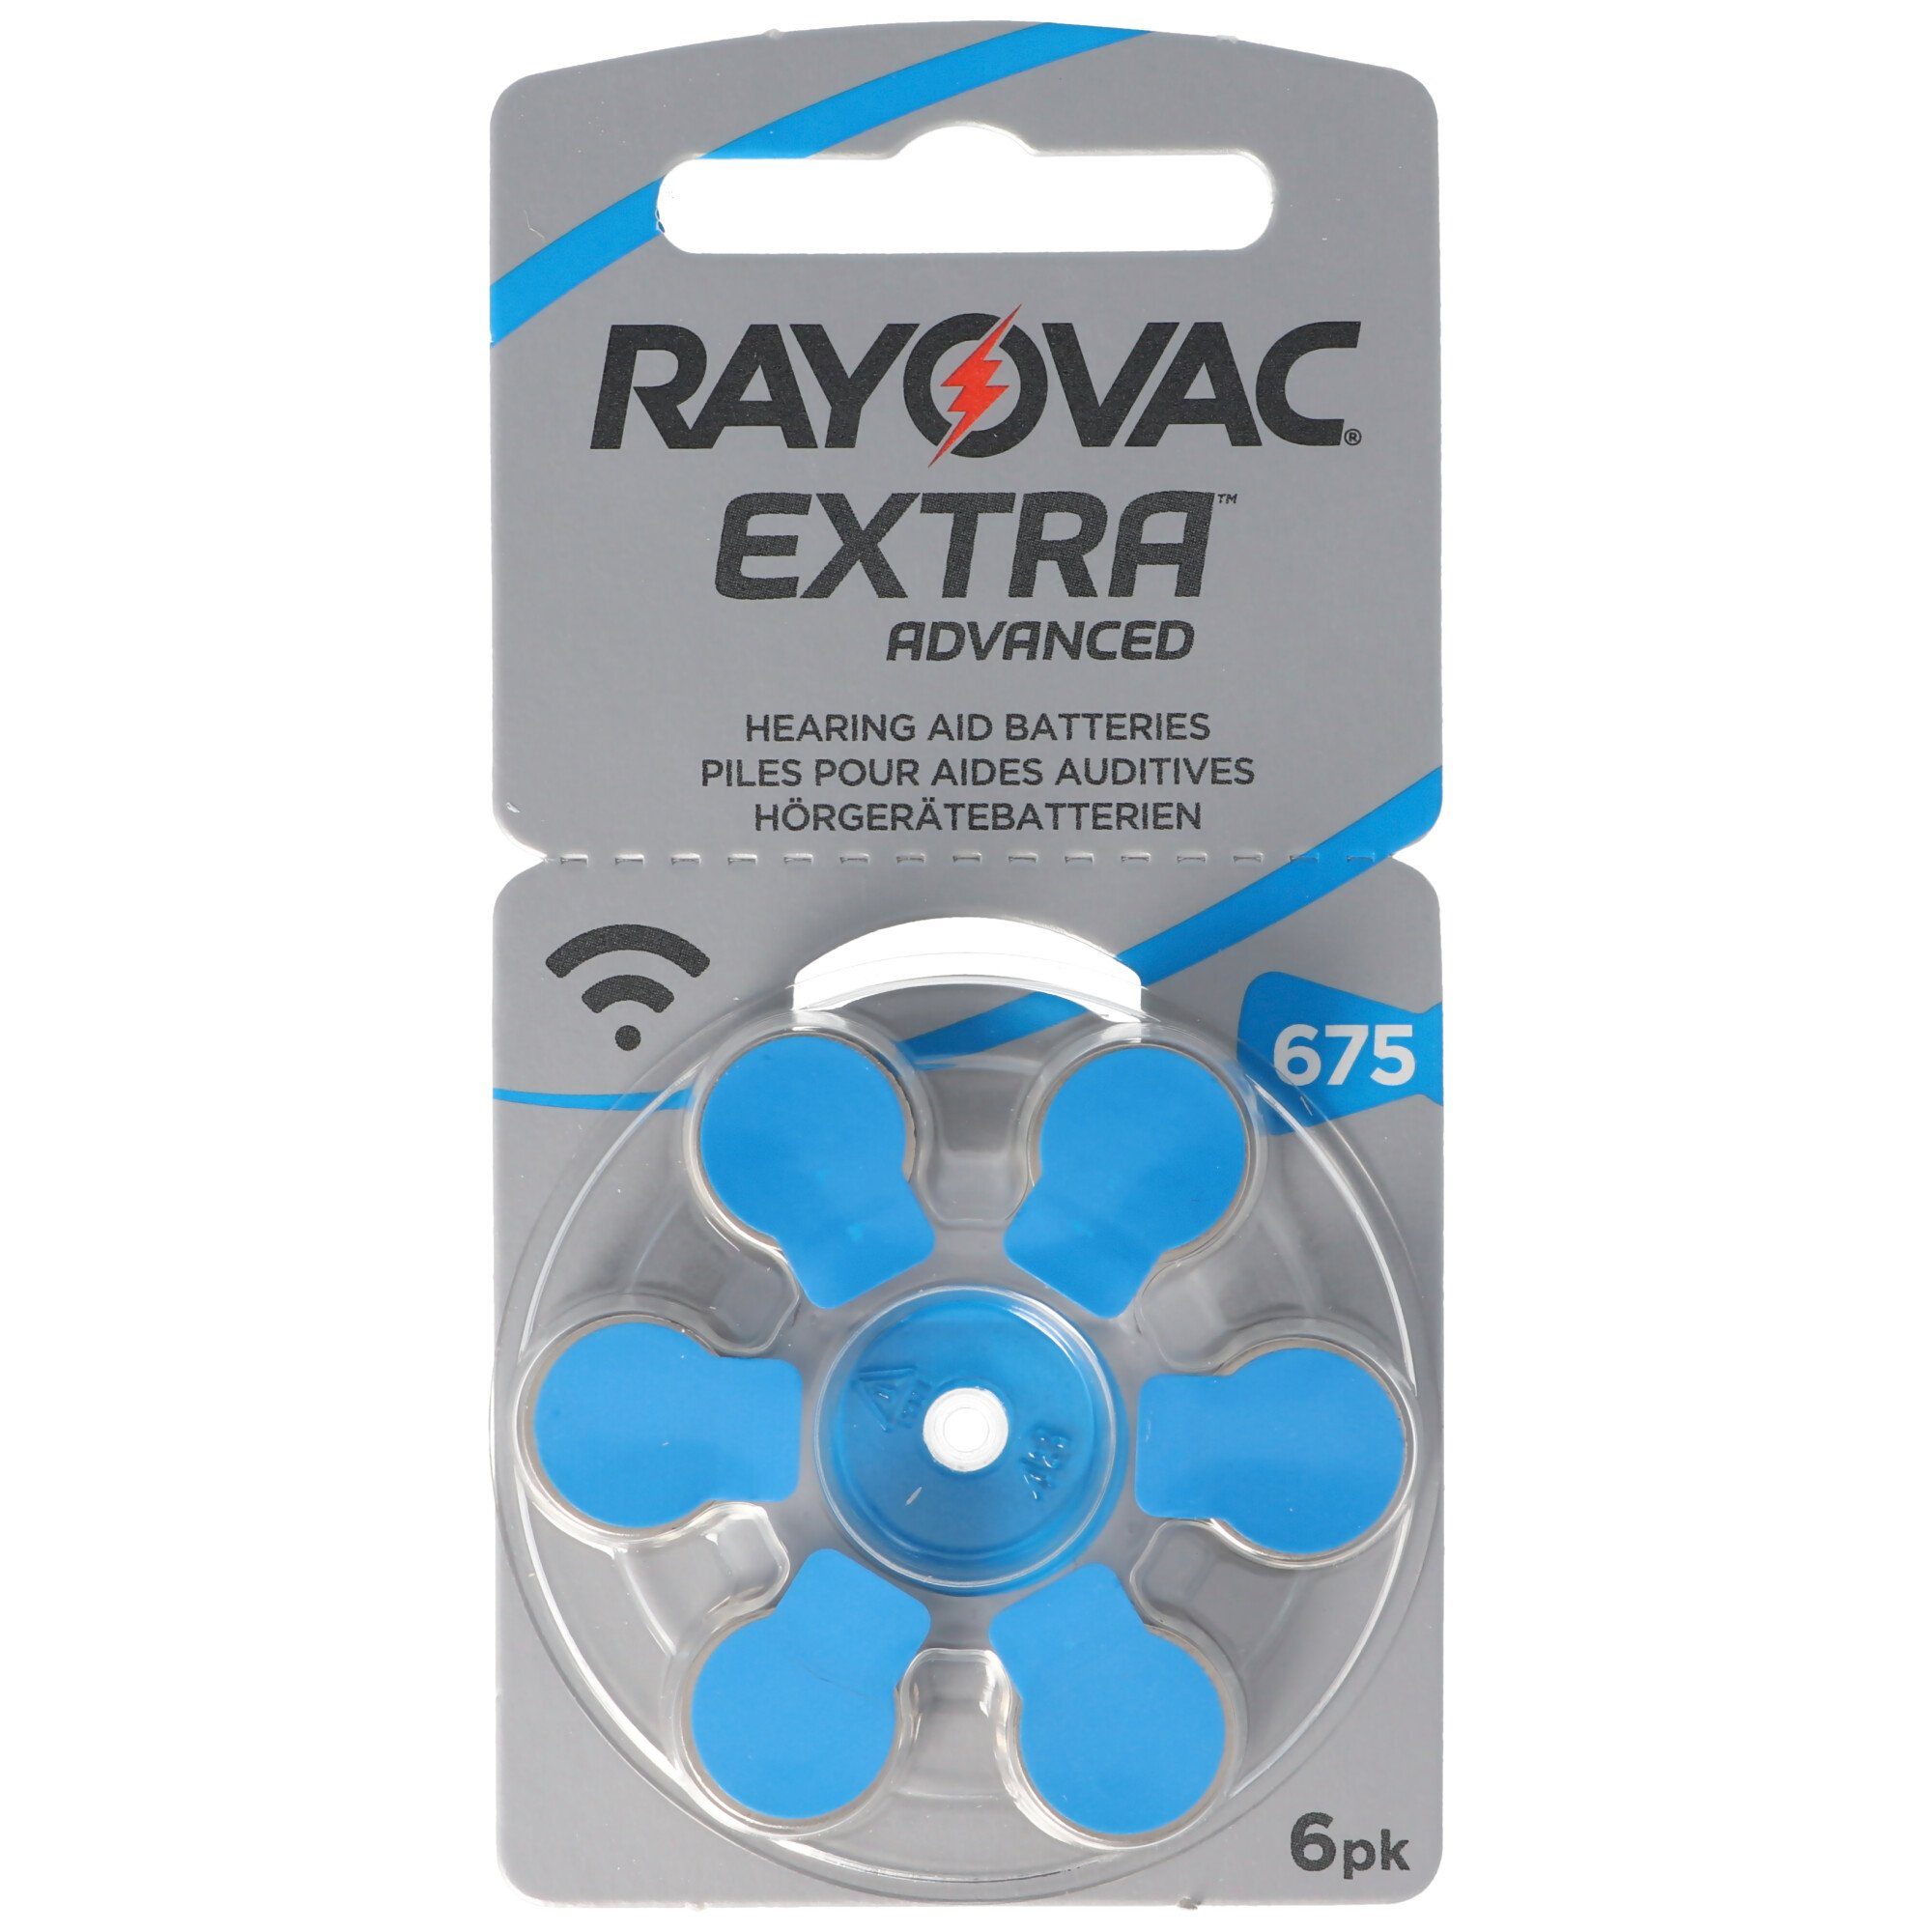 RAYOVAC Rayovac Extra Advanced 4600, V) Batterie, HA675, (1,4 PR44, Hörgerätebatterie Acoustic